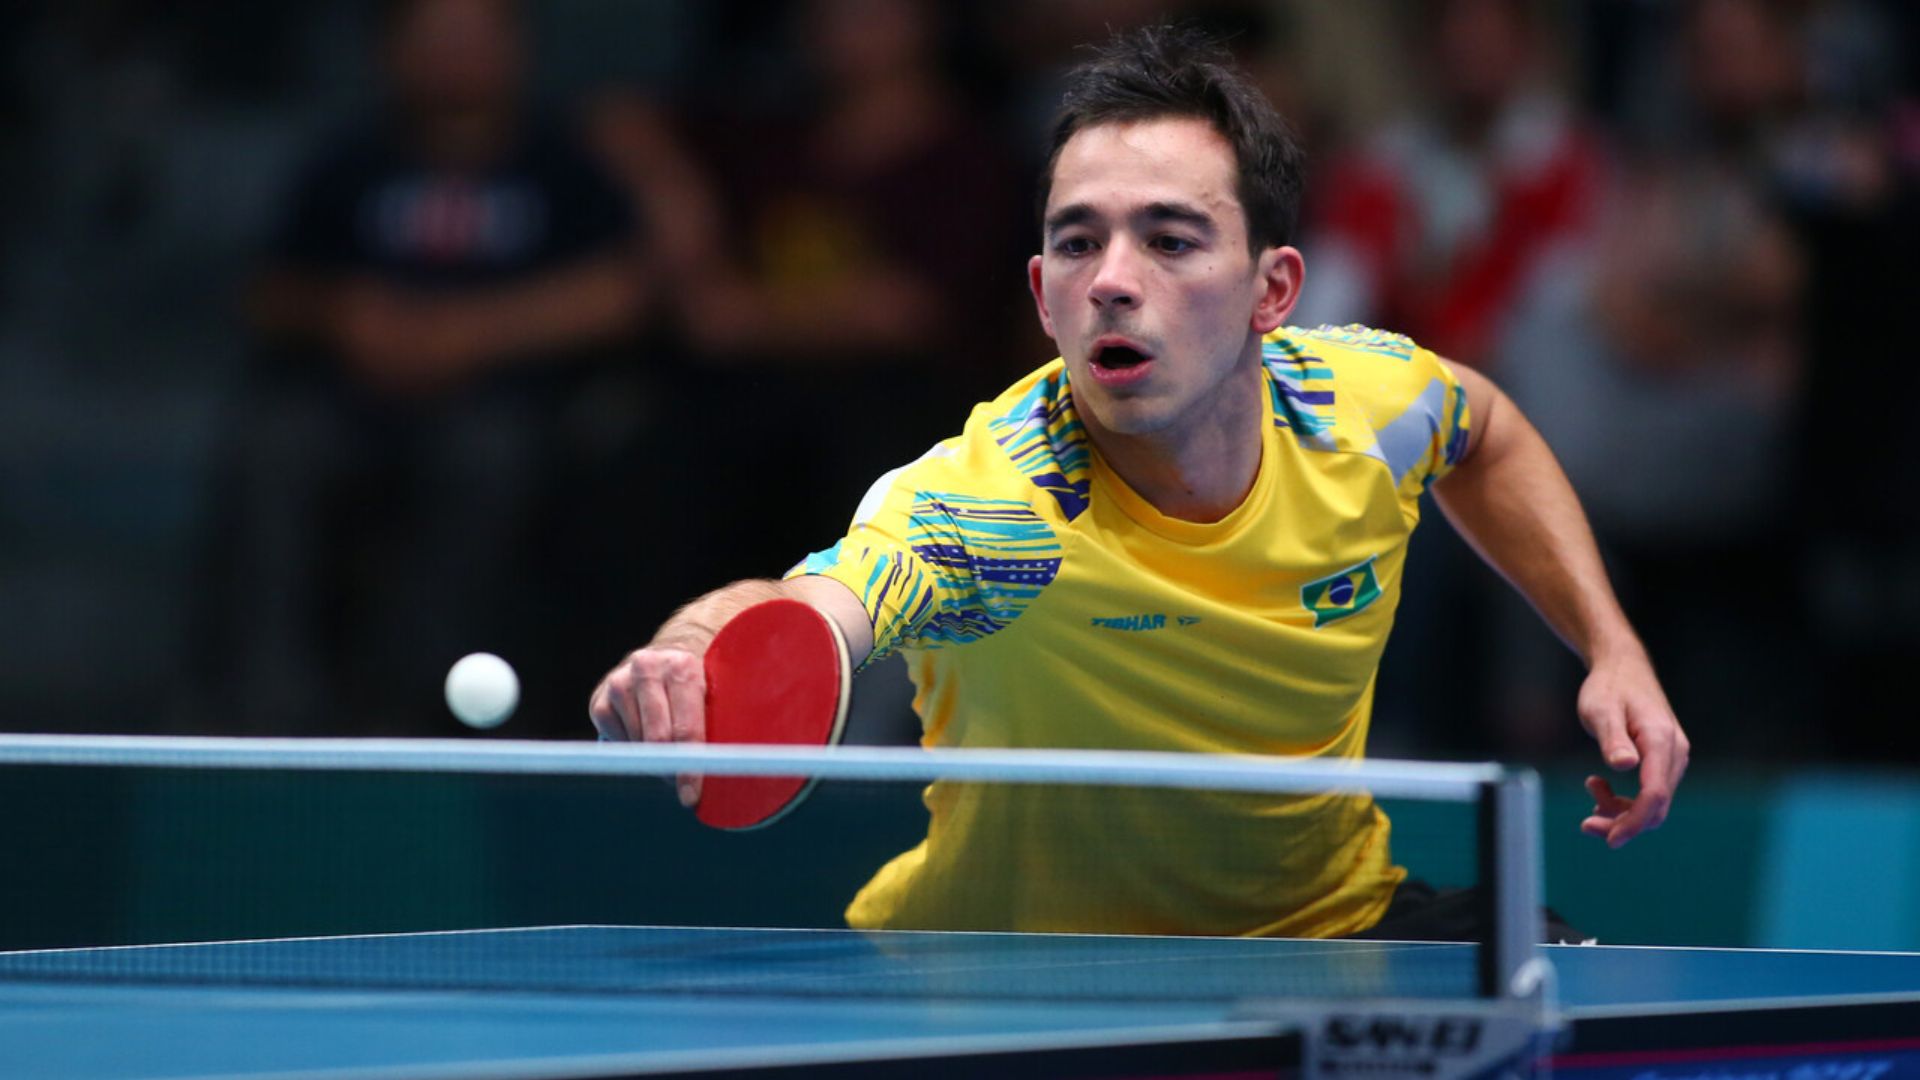 Brazilian Hugo Calderano continues strong on his path to a table tennis medal